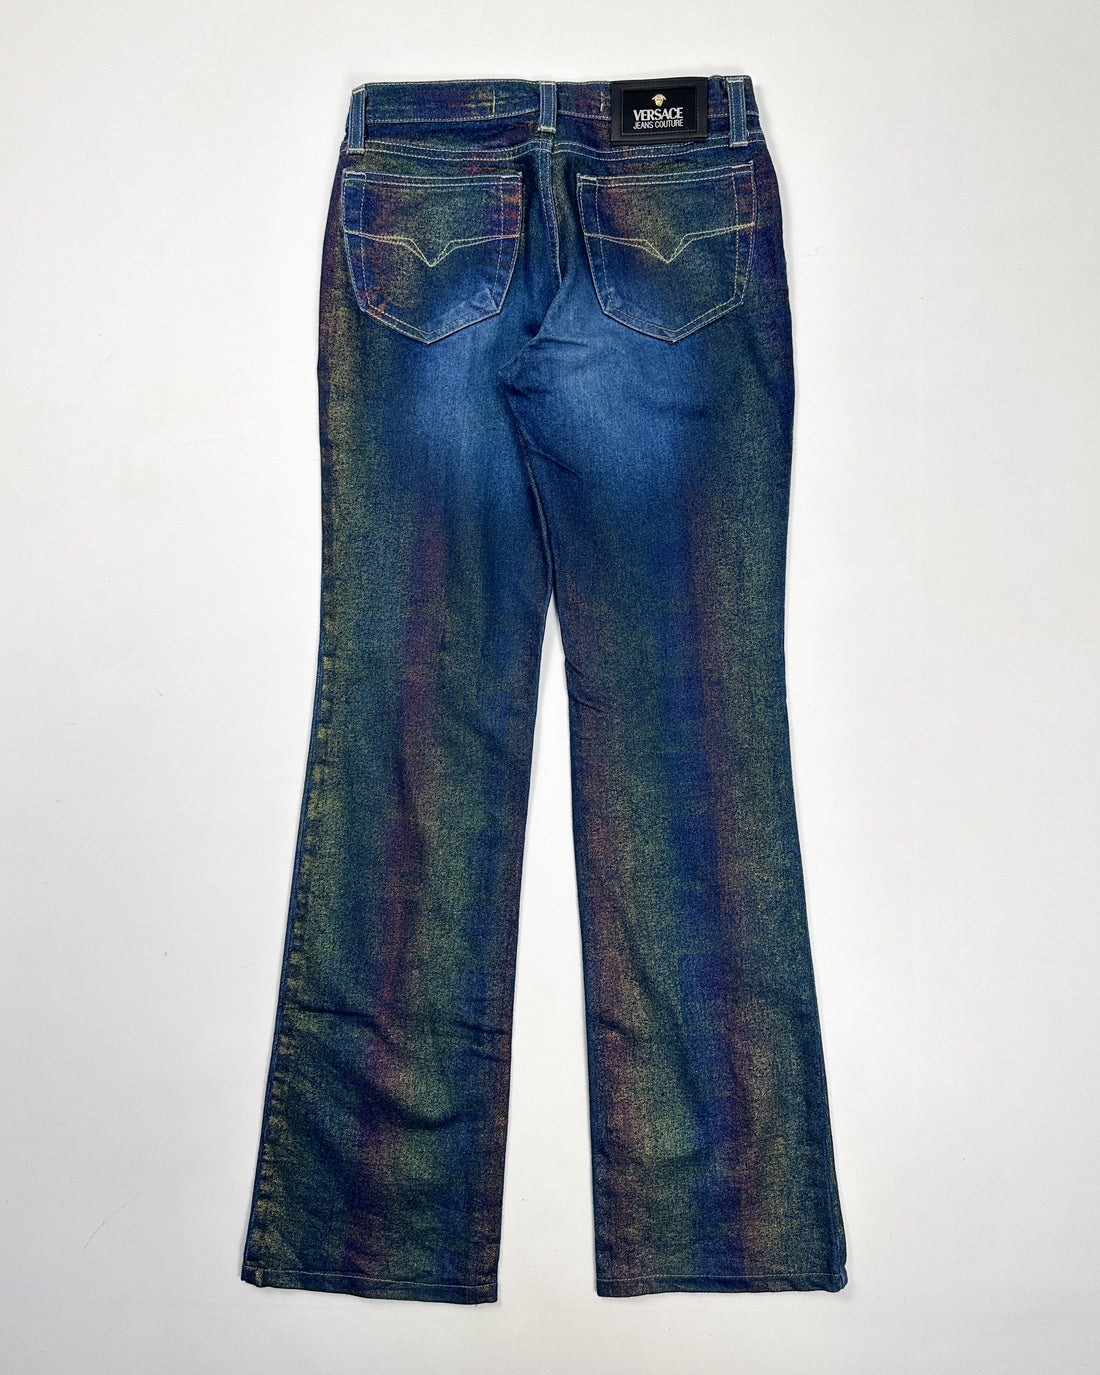 Versace Rainbow Shinny Denim Pants 2000's